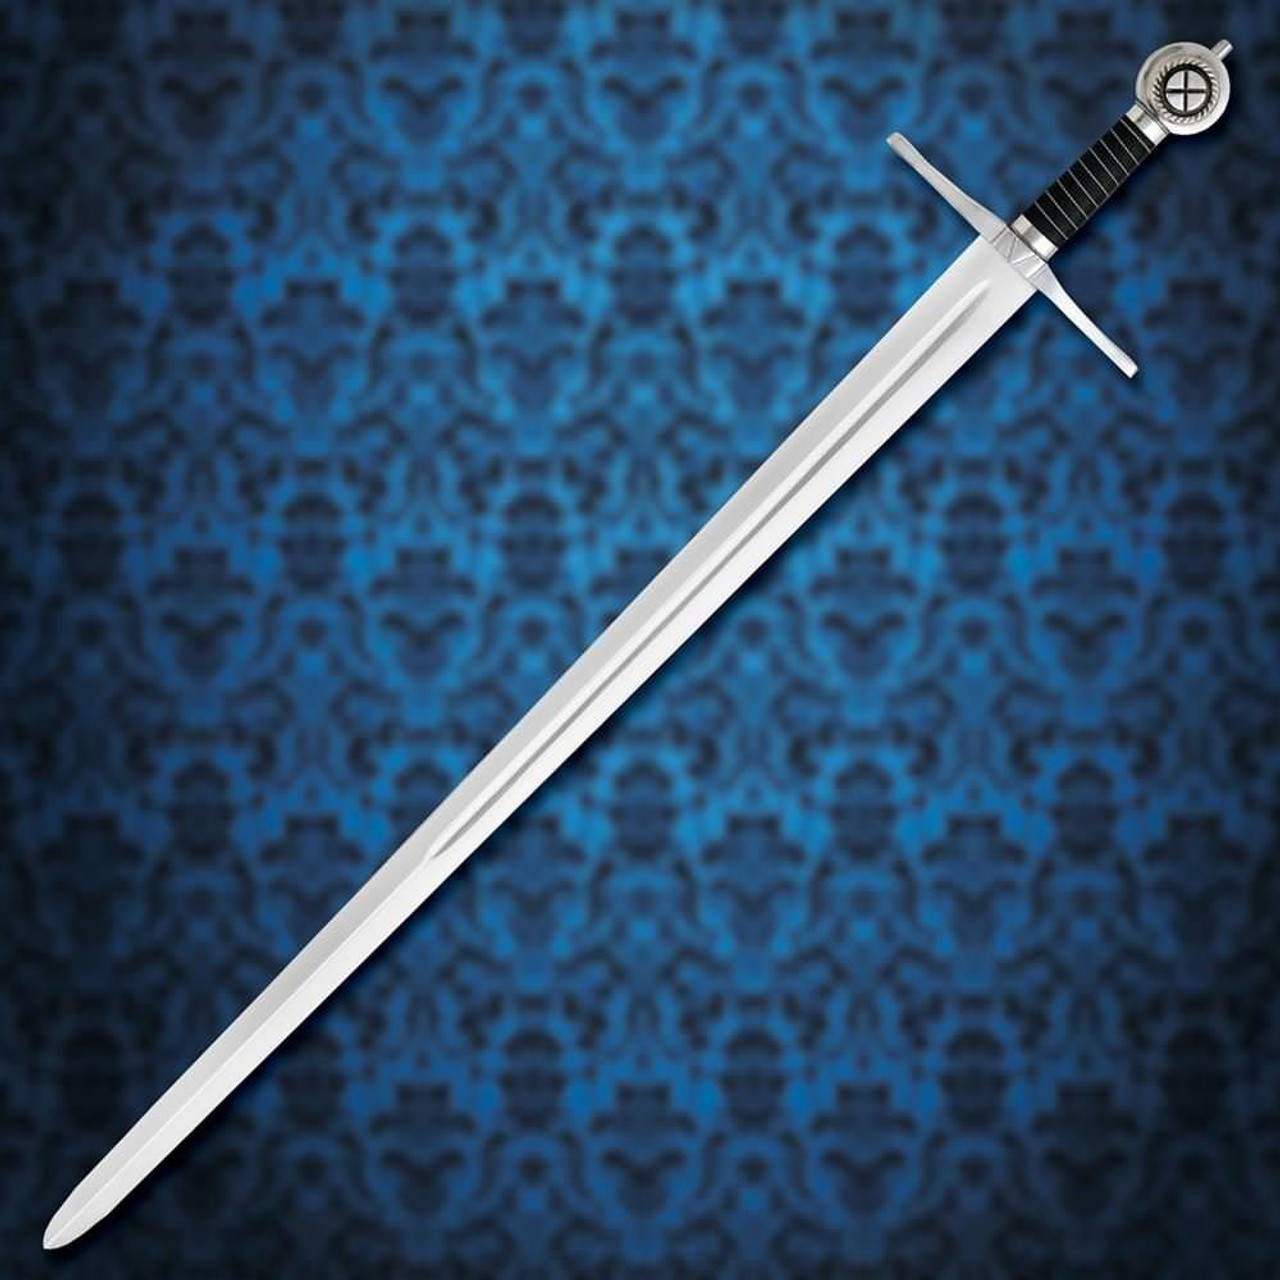 Robert the Bruce sword by Windlass has a 1065 High Carbon Steel blade